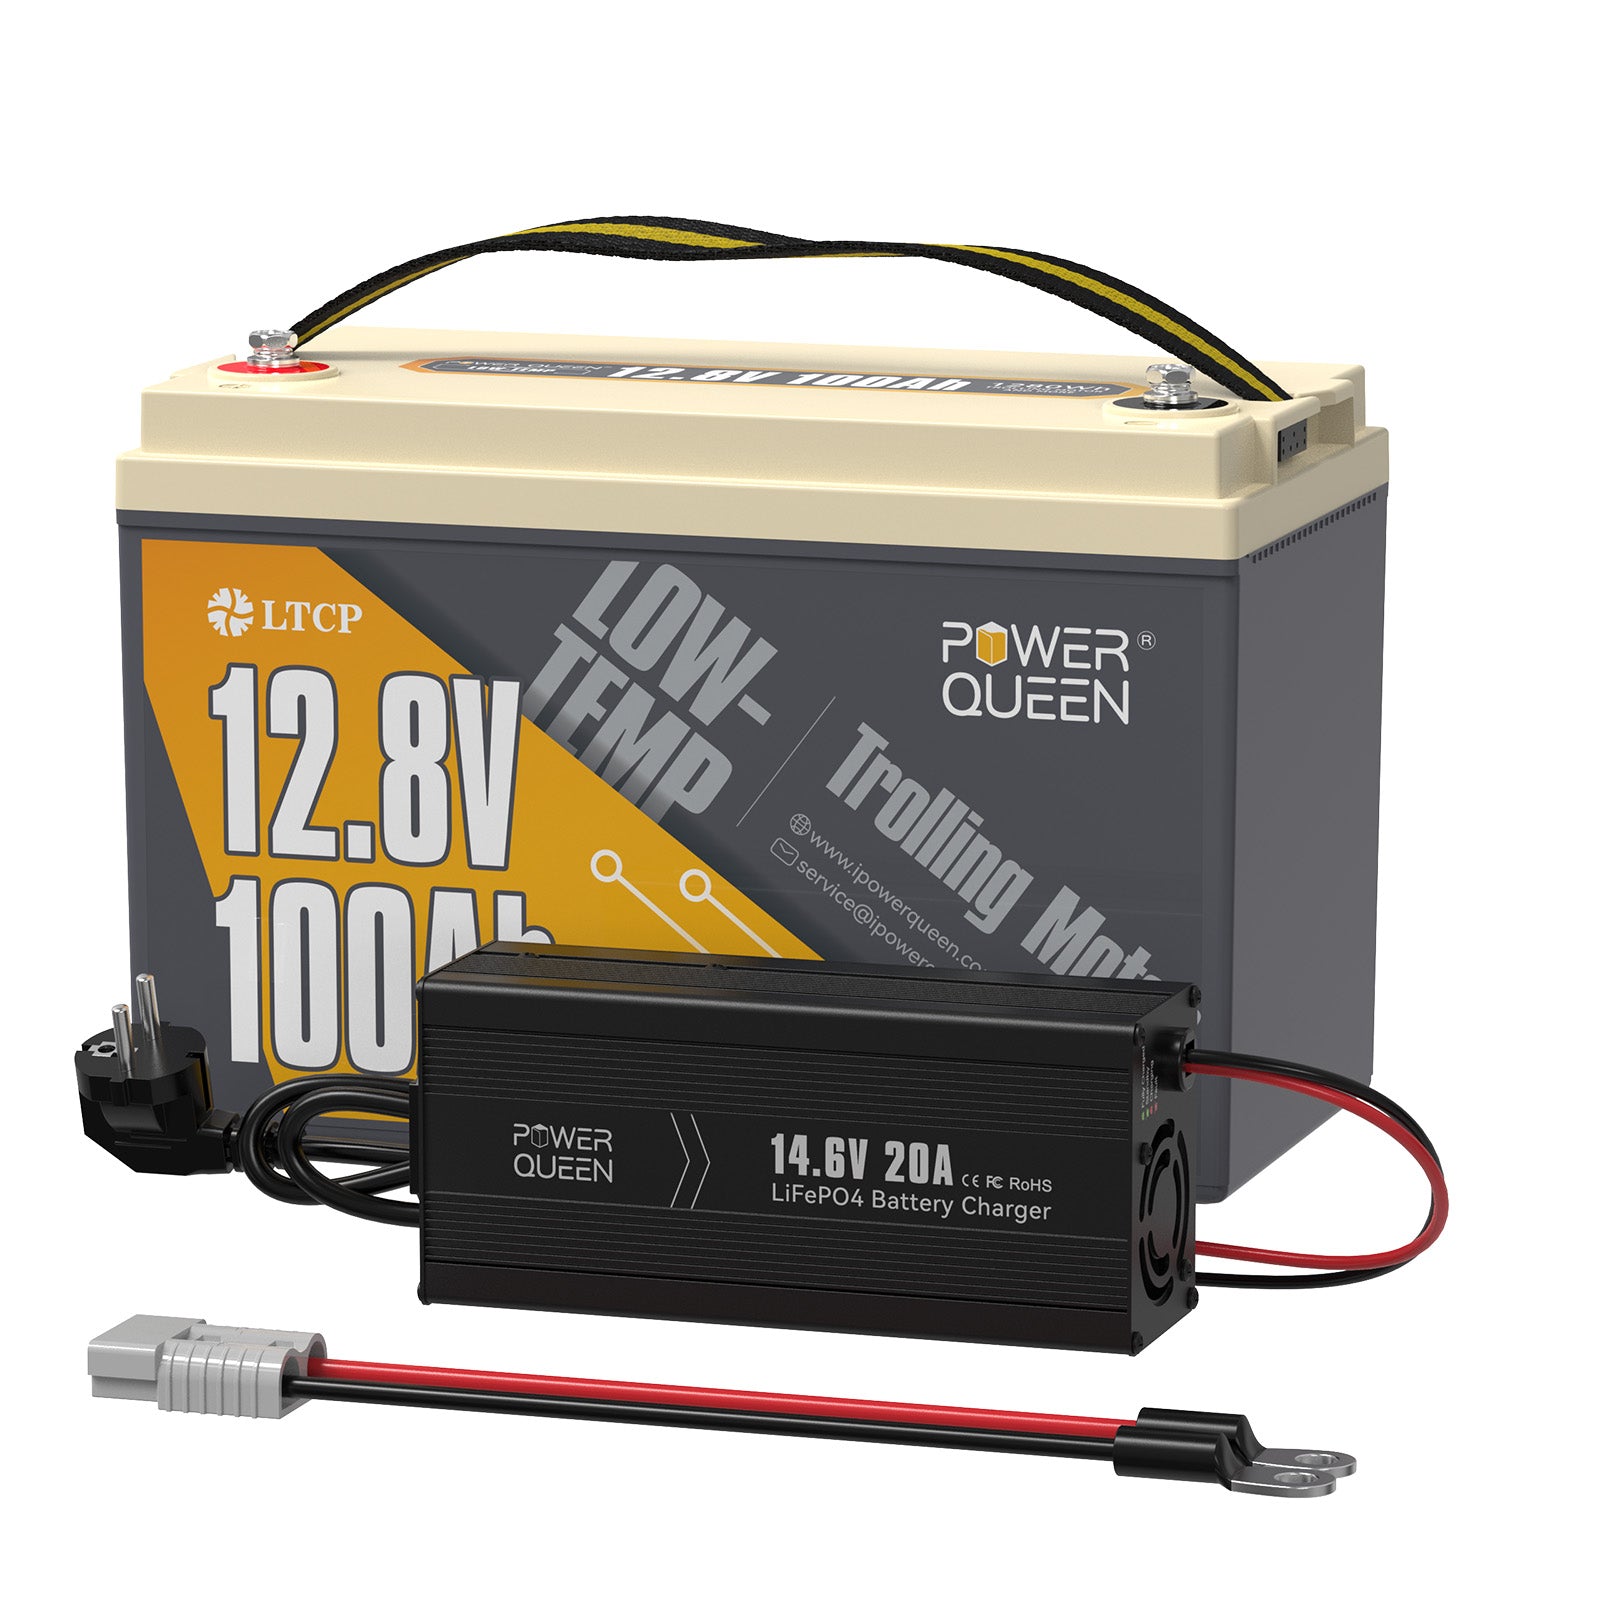 【0% IVA】Batería LiFePO4 de baja temperatura Power Queen 12V 100Ah, batería de motor de pesca por curricán